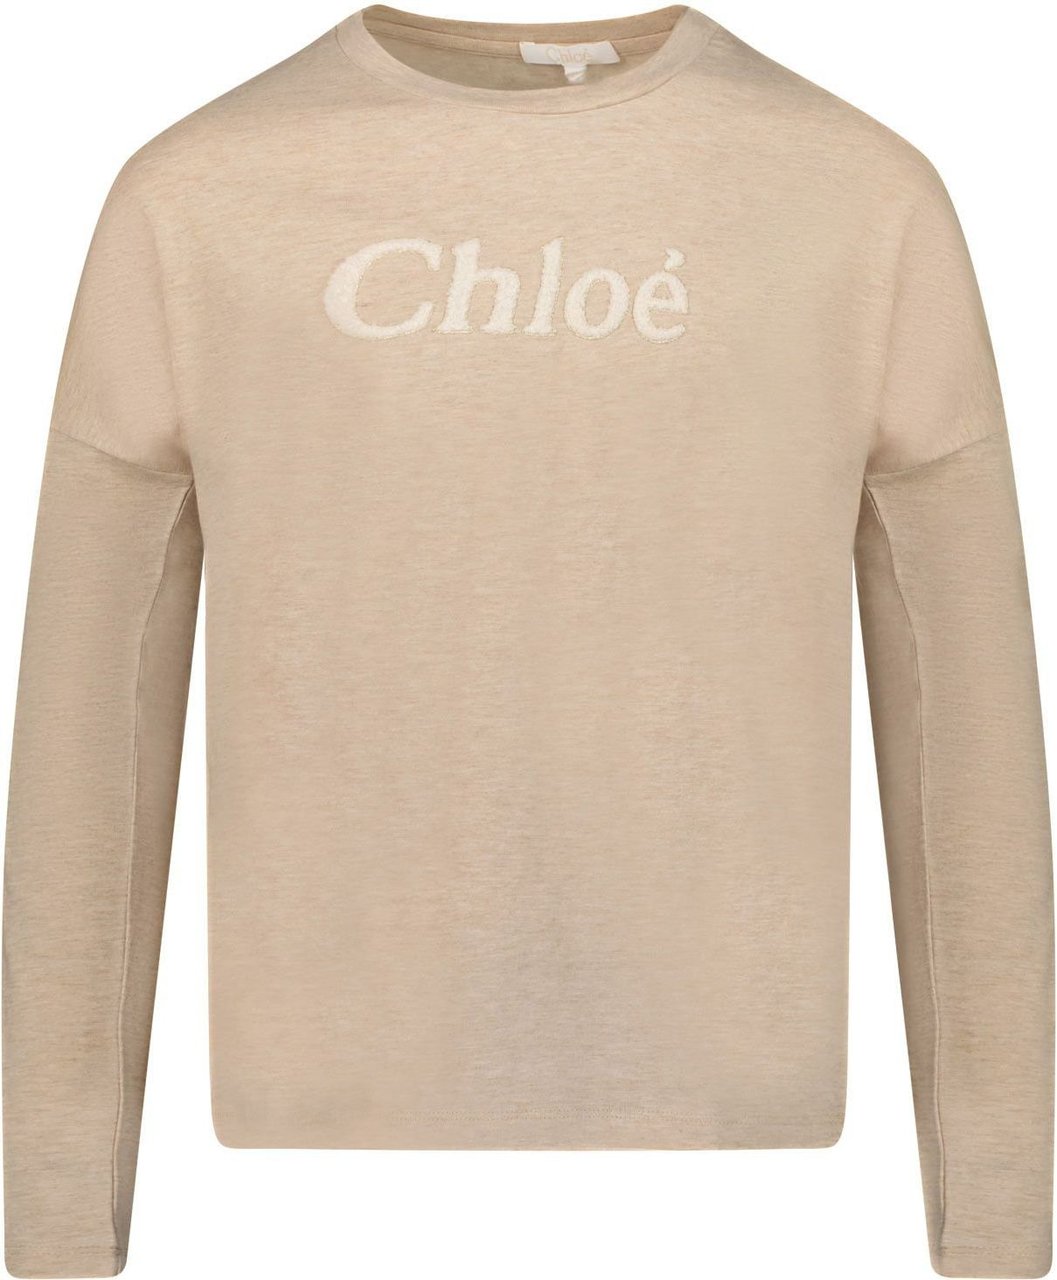 Chloé Chloe C15D73 kinder t-shirt beige Beige